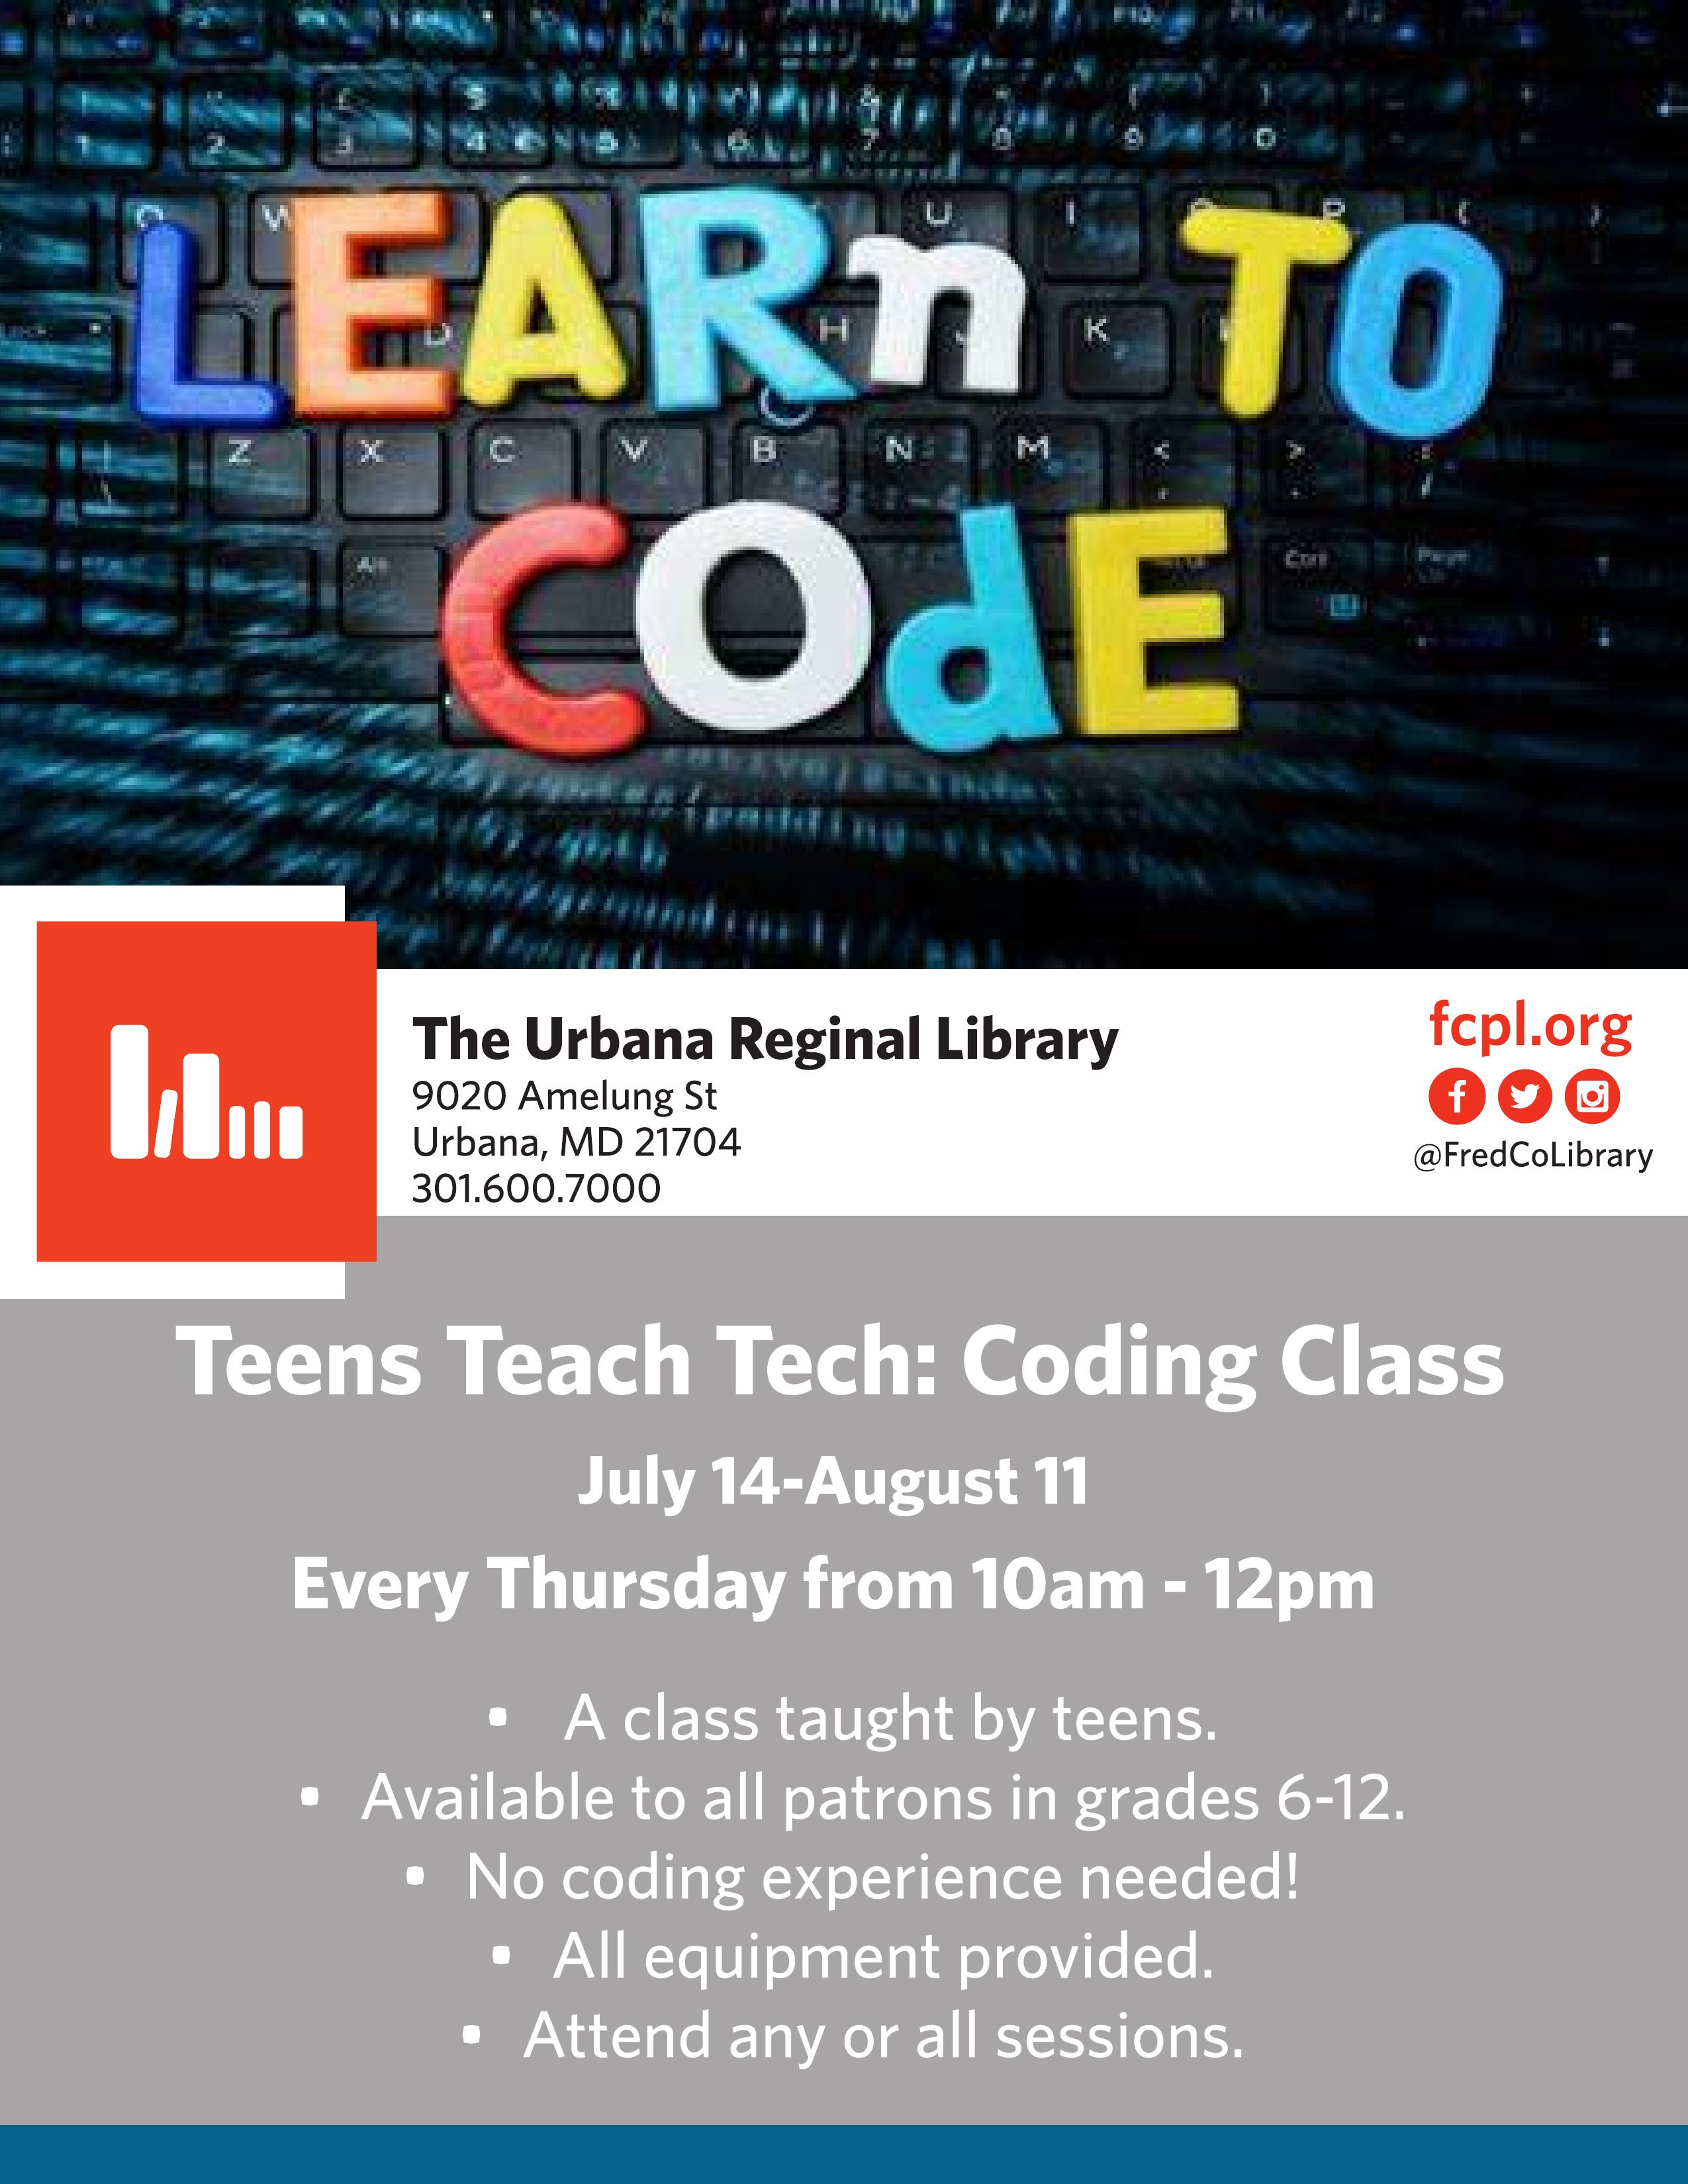 Learn to Code! Teen Teaches Tech Coding Class for Teens 